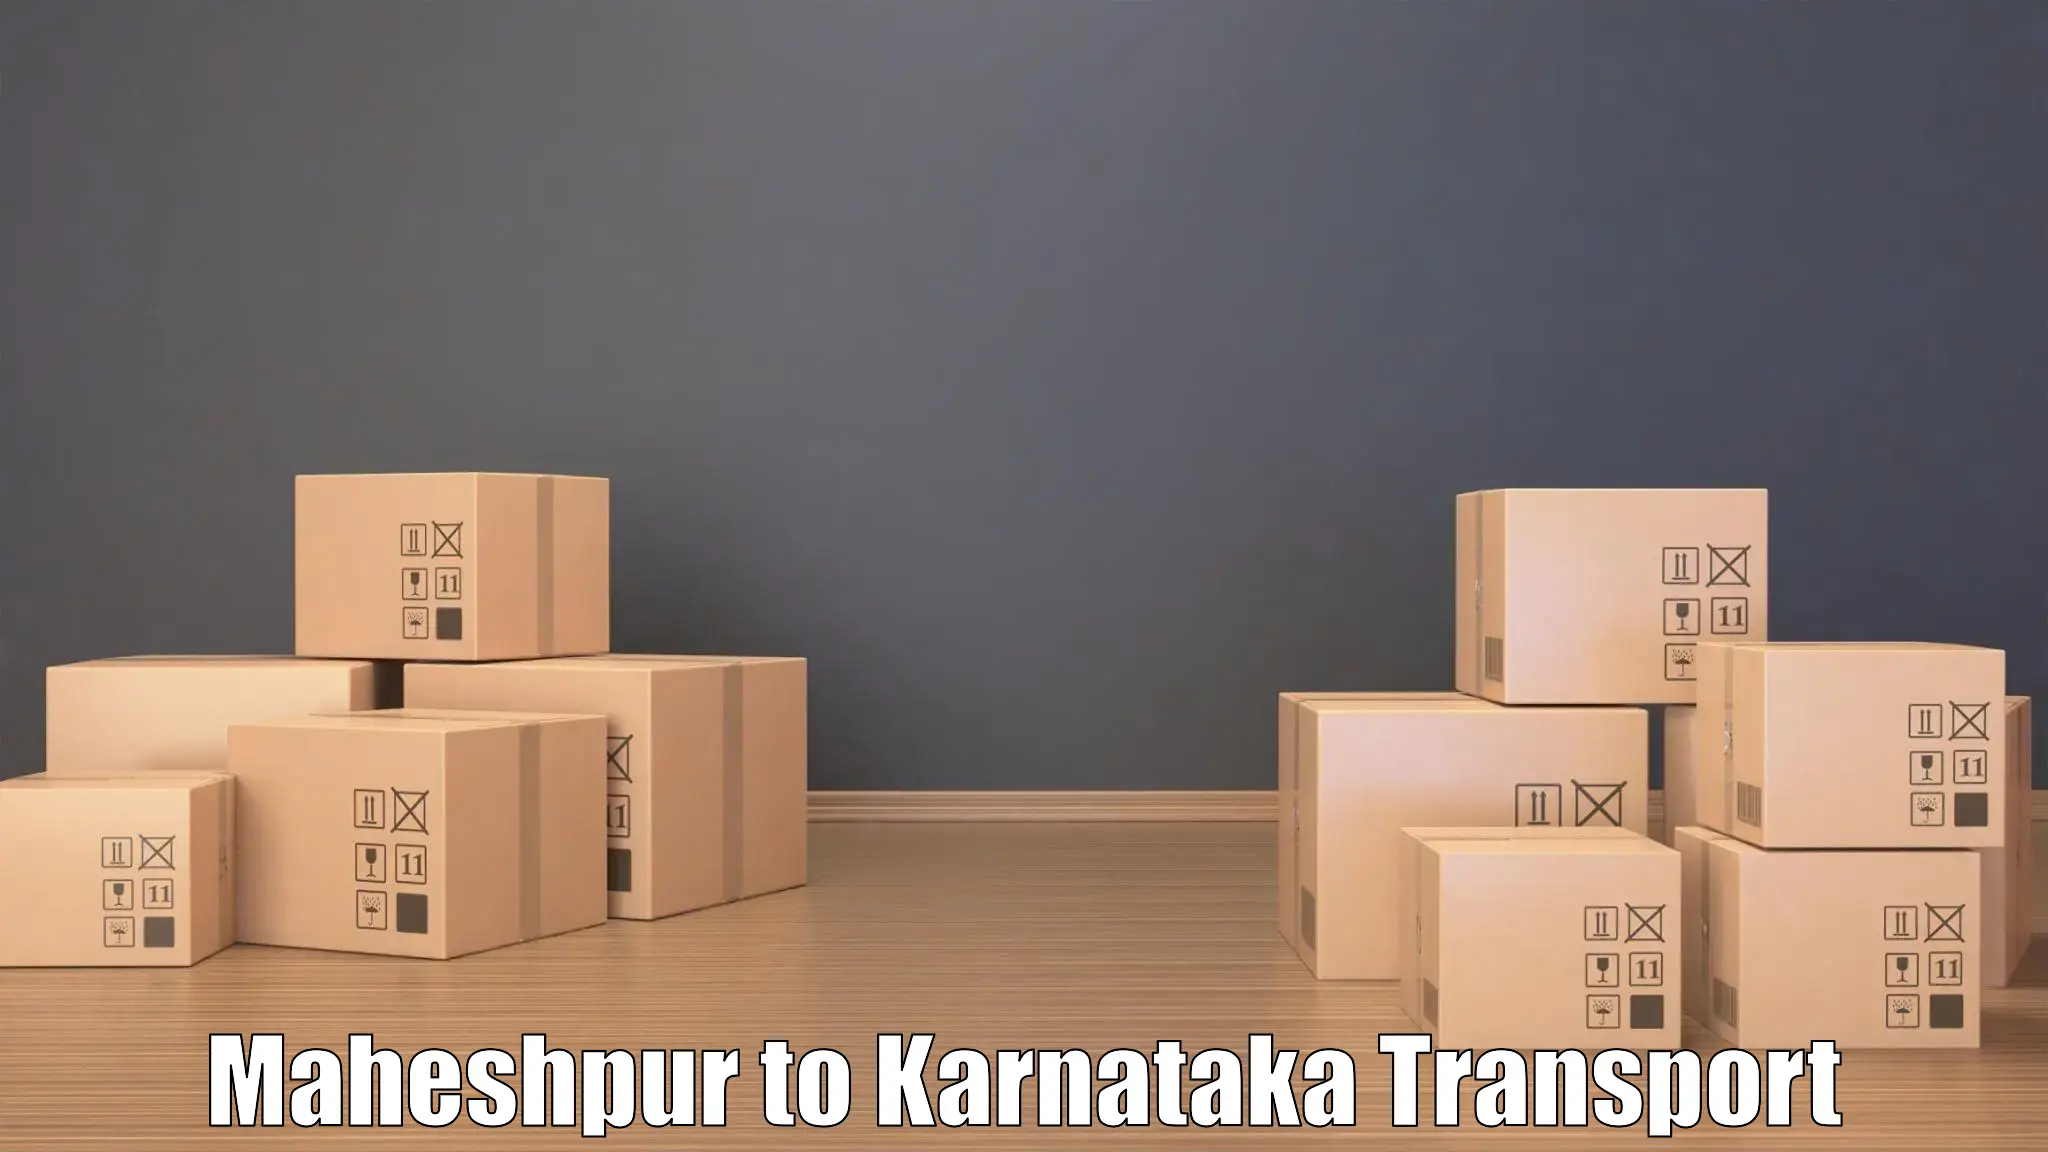 Truck transport companies in India Maheshpur to Devanahalli